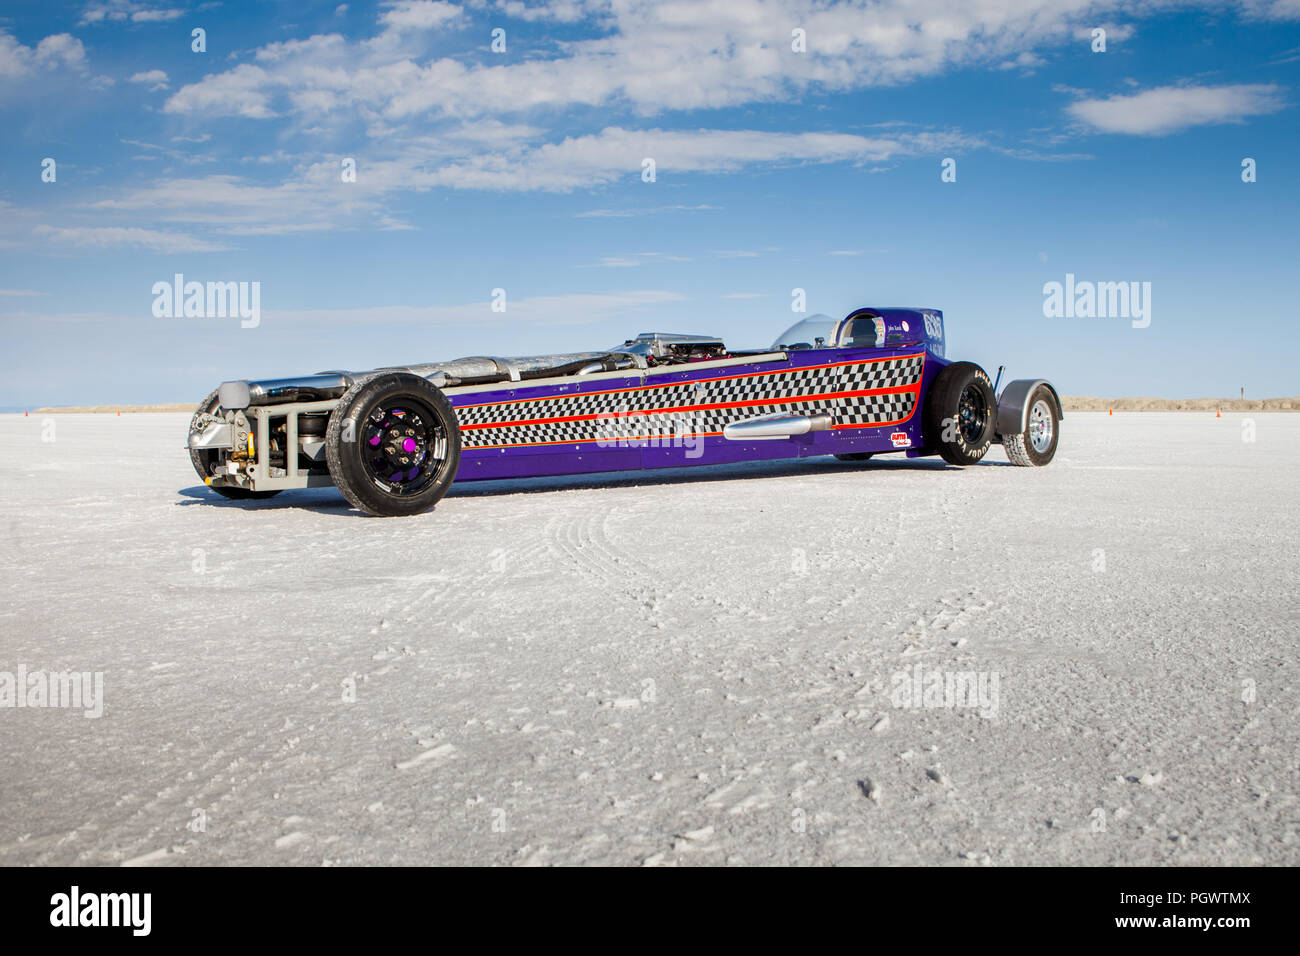 Vintage race car at the Bonneville Salt Flats International Speedway near Wendover, Utah Stock Photo